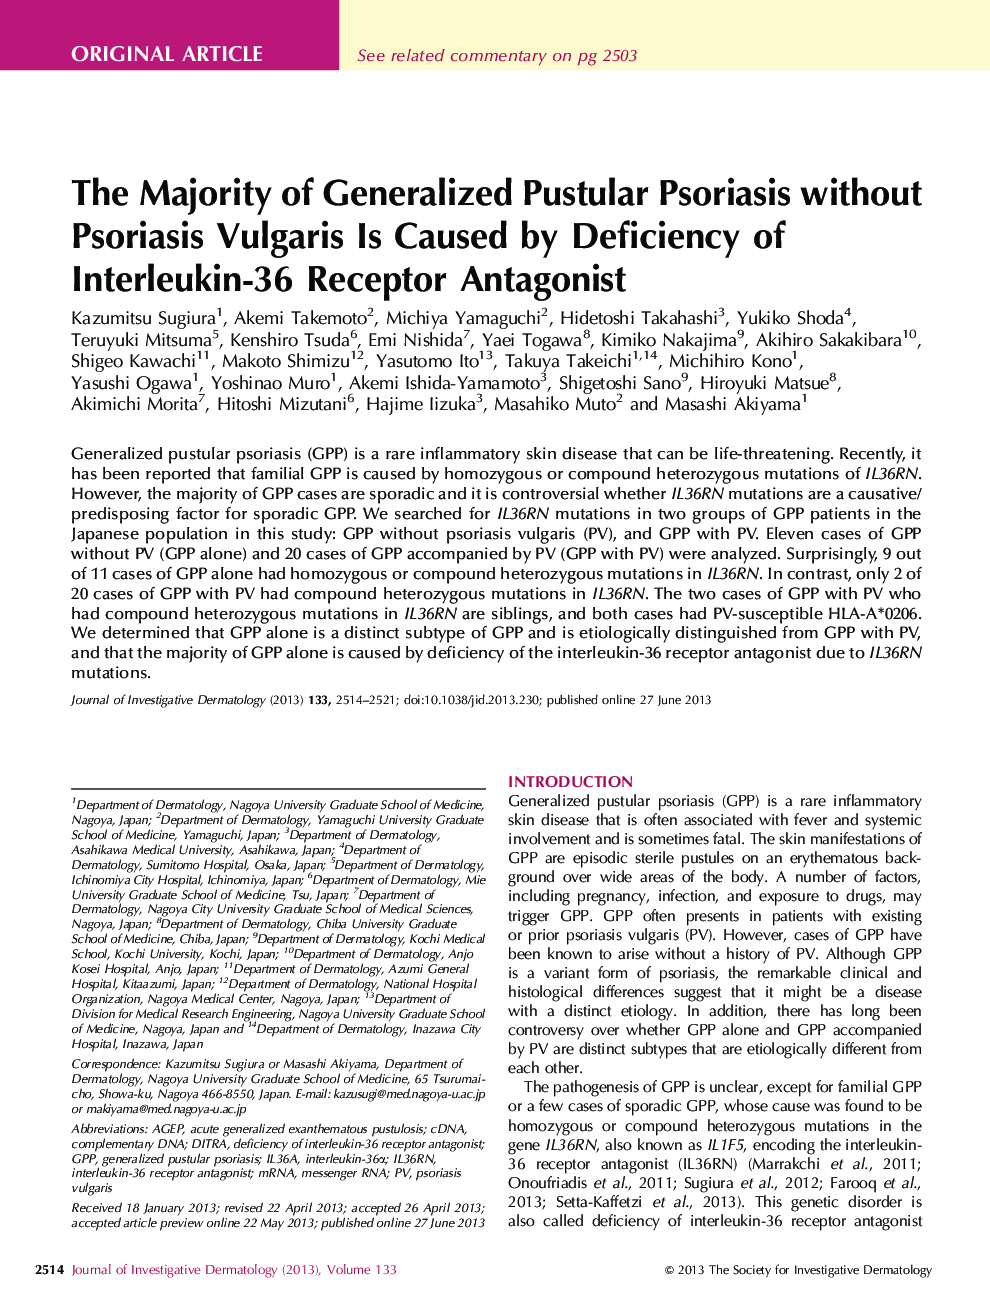 Original ArticleThe Majority of Generalized Pustular Psoriasis without Psoriasis Vulgaris Is Caused by Deficiency of Interleukin-36 Receptor Antagonist